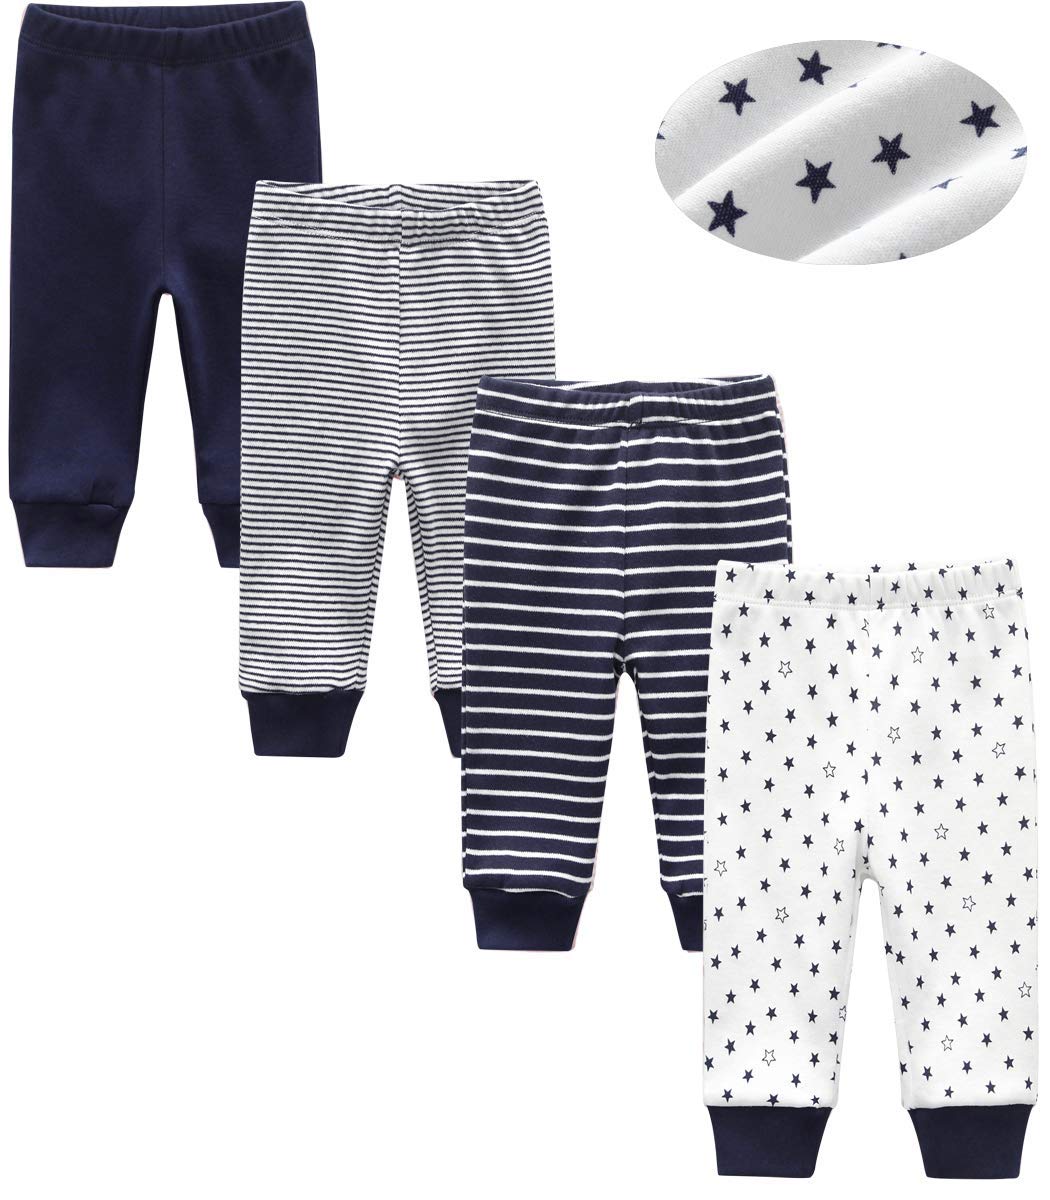 Kiddiezoom Unisex Newborn Baby Short-Sleeve Bodysuit Baby Layette Essentials Giftset Clothing Set